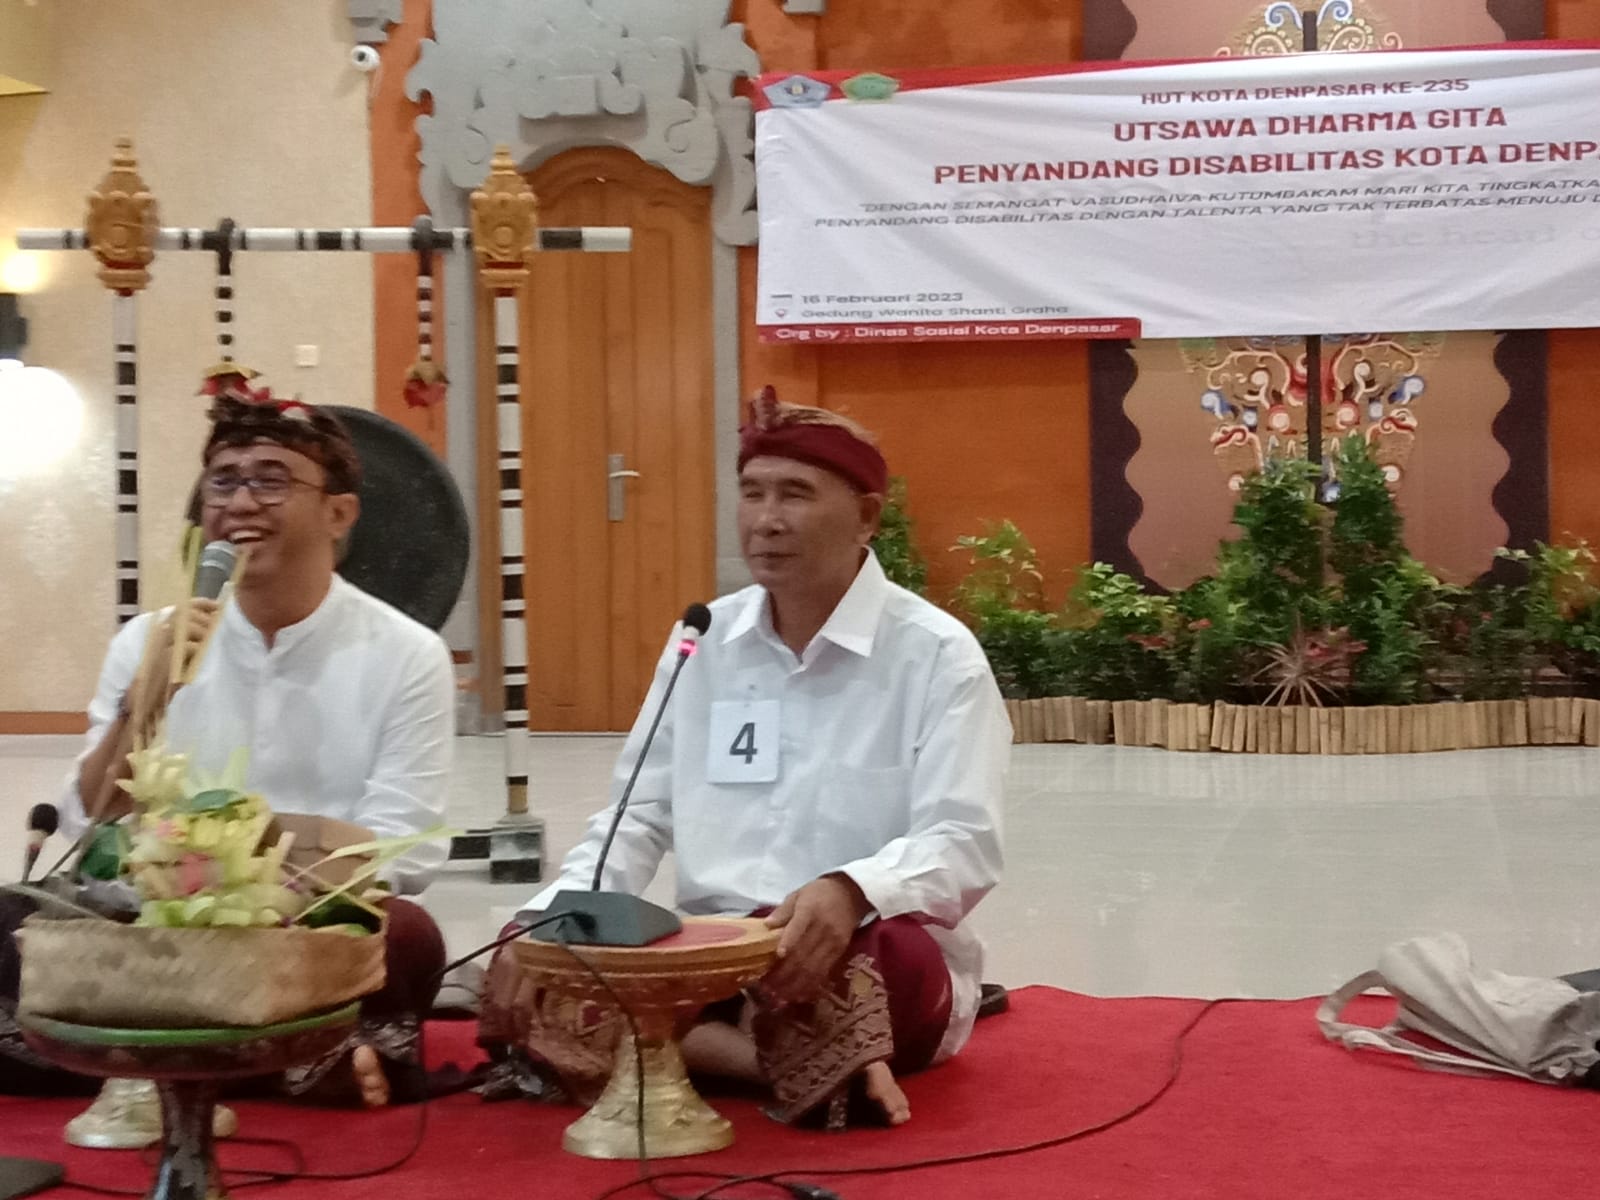 Lomba utsawa dharma Gita disabilitas kota Denpasar dibuka oleh Bapak Walikota di gedung santhi graha